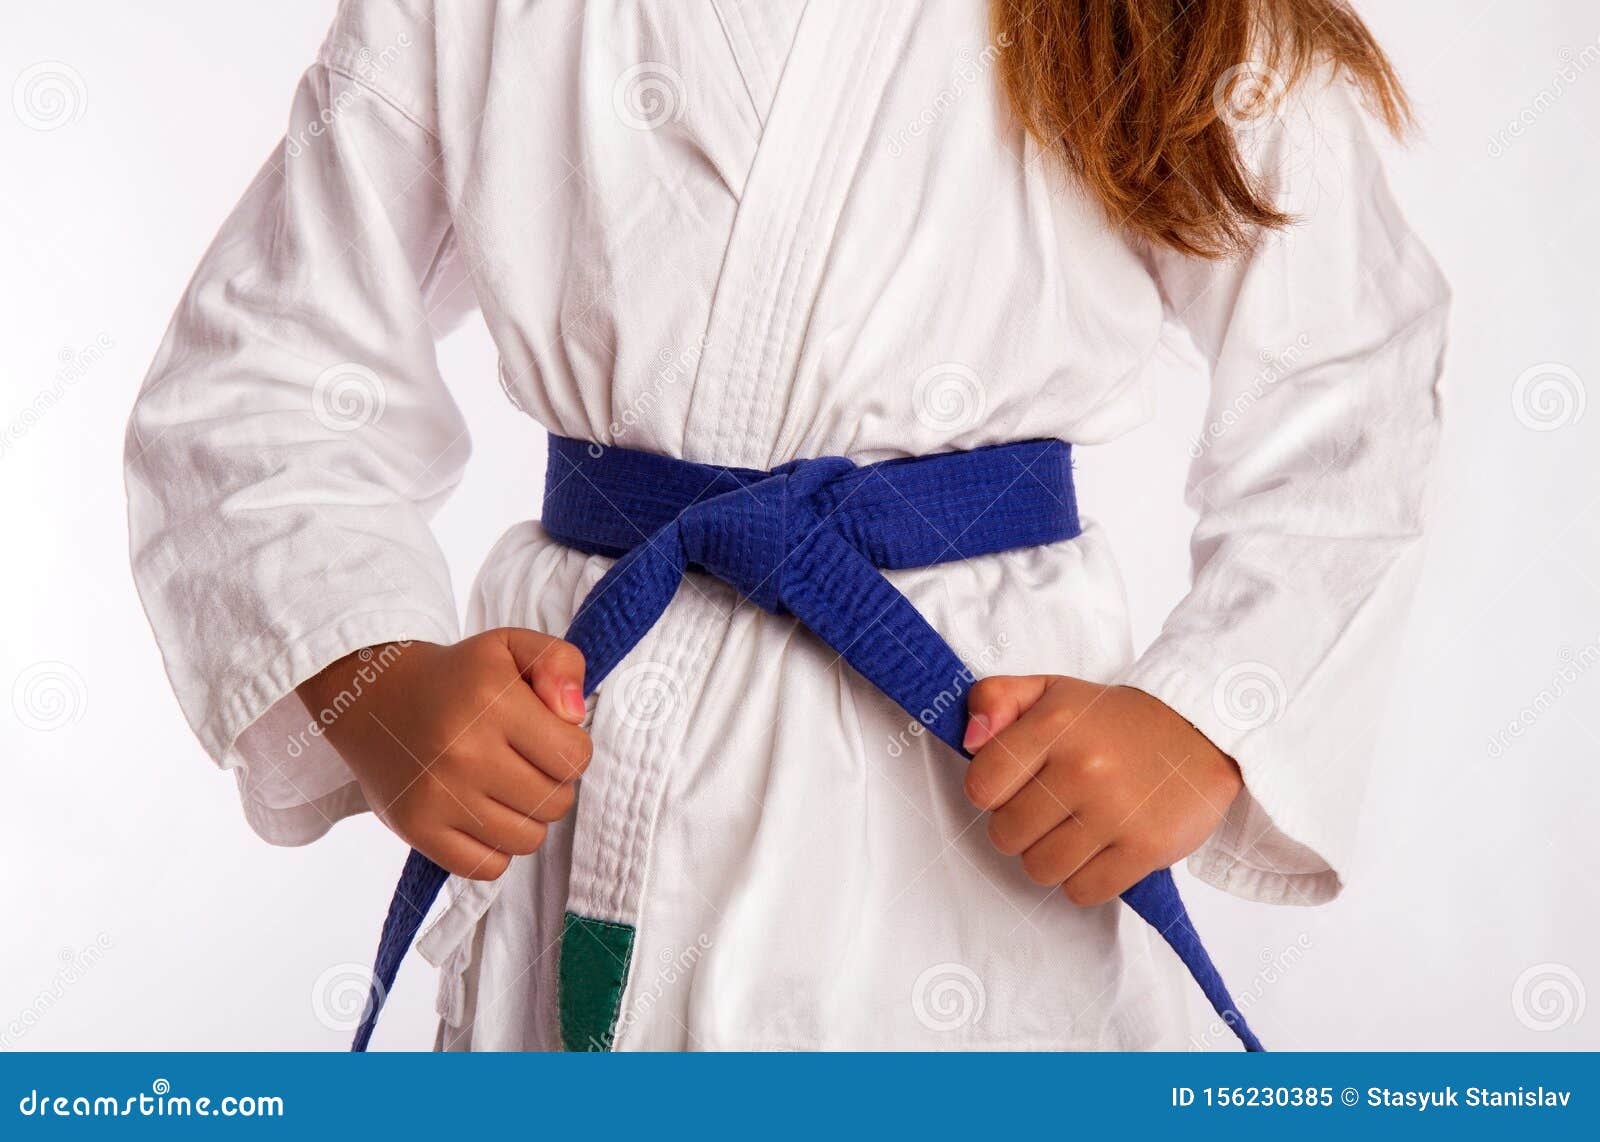 Tie karate belt stock image. Image of aikido, taekwondo - 156230385